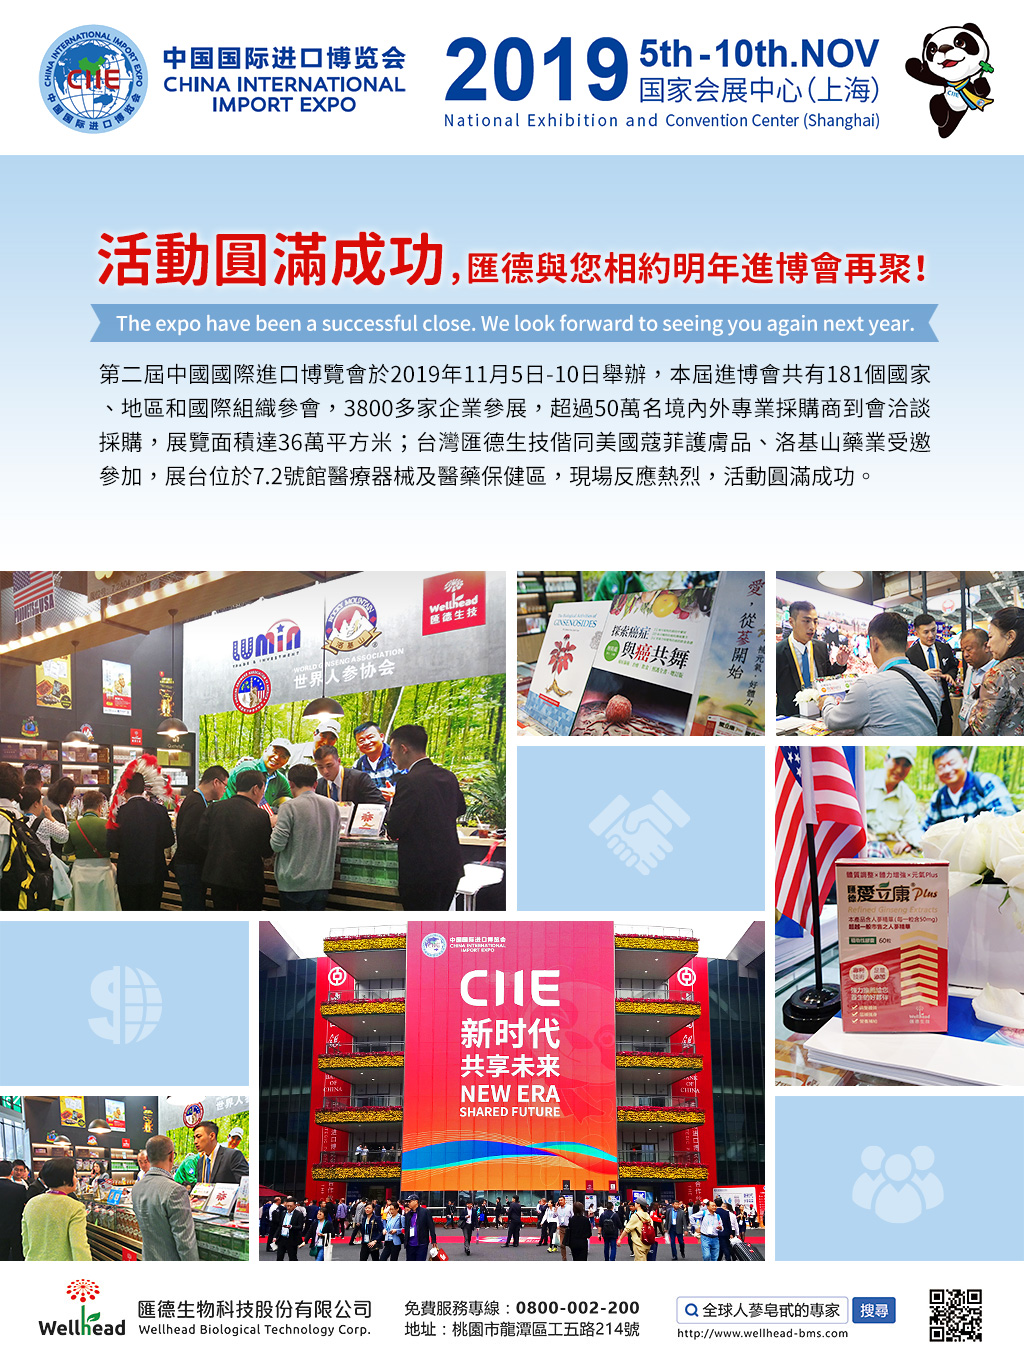 [ 2019 China International Import Expo ] The expo had a successful ending, having wonderful tidbits